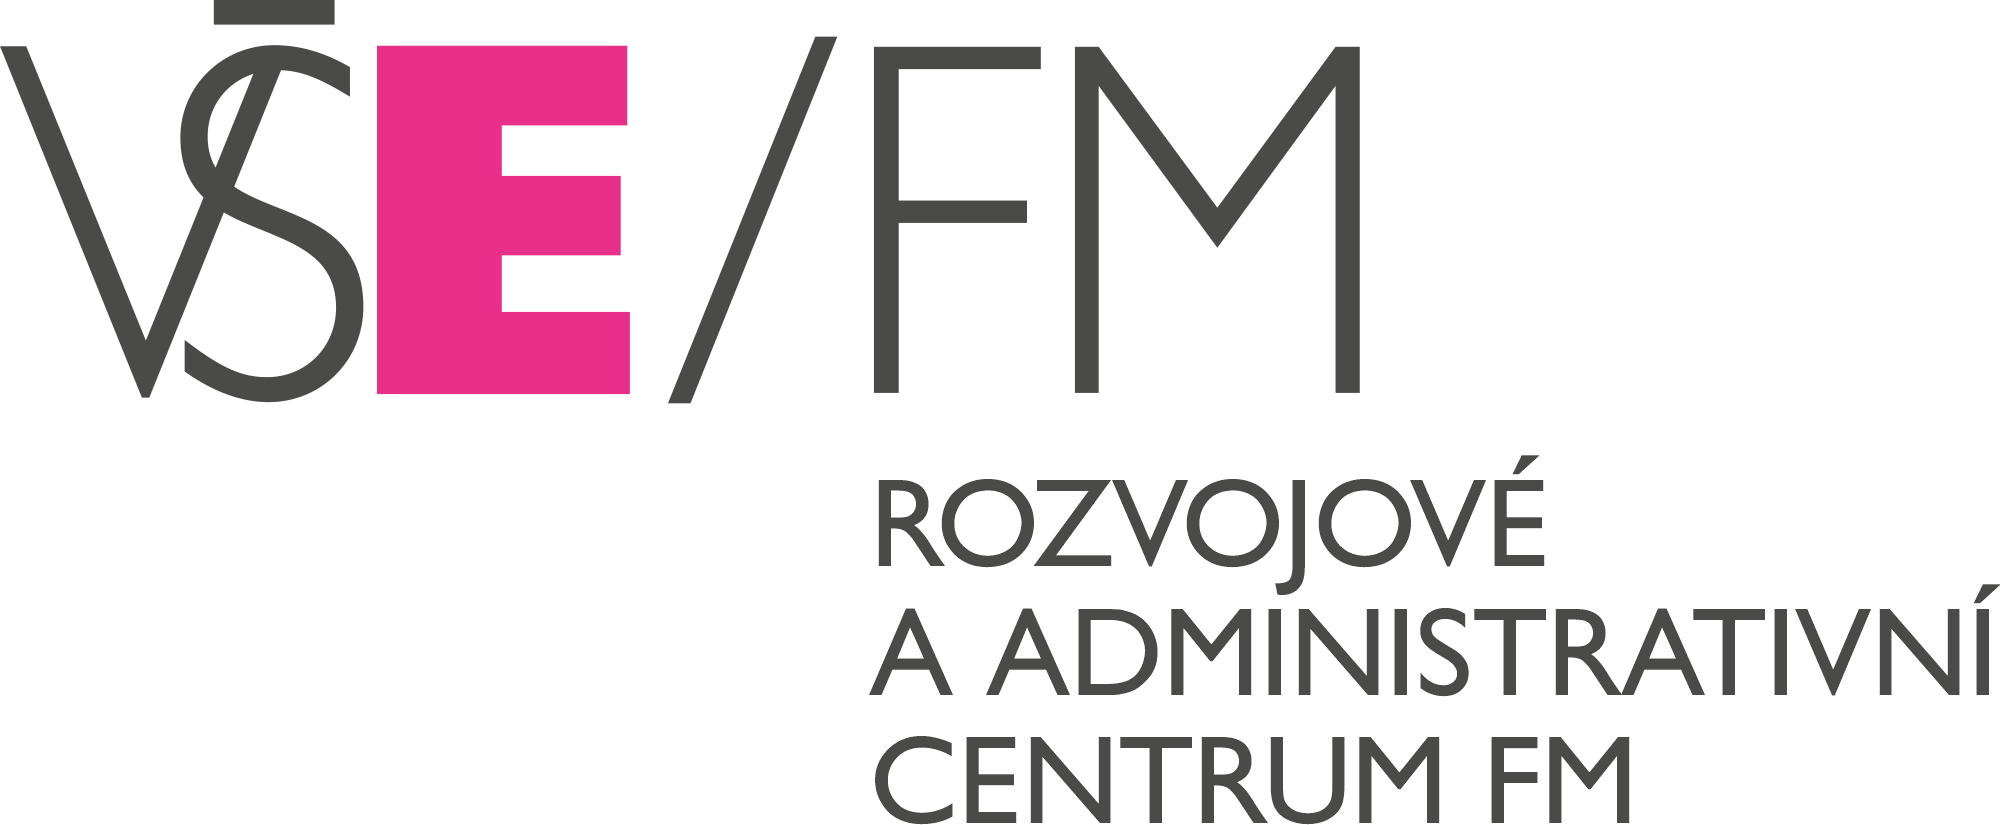 Rozvojové a administrativní centrum FM